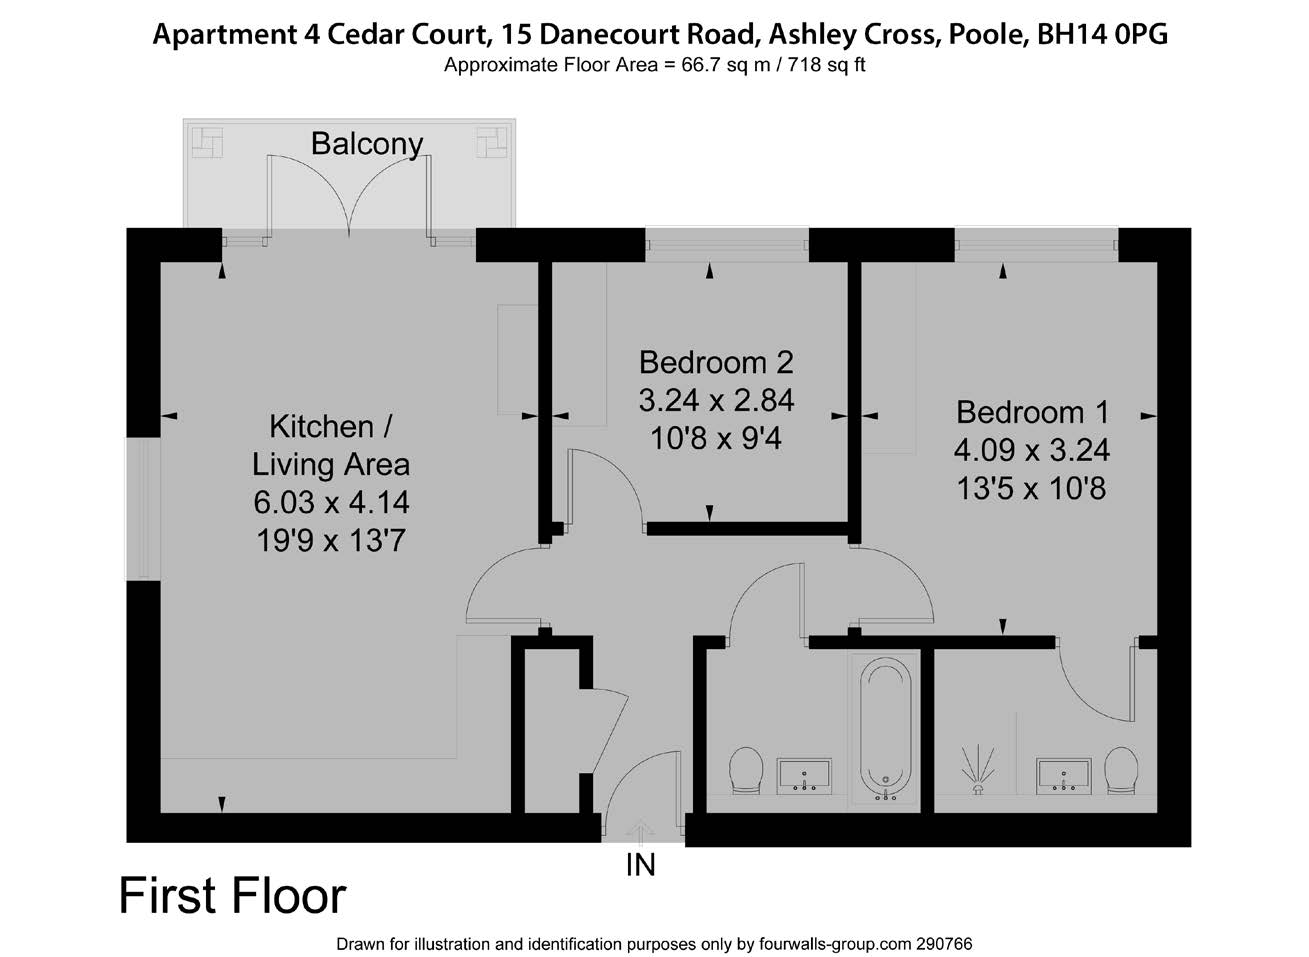 Apartment 4 Cedar Court Floor plan